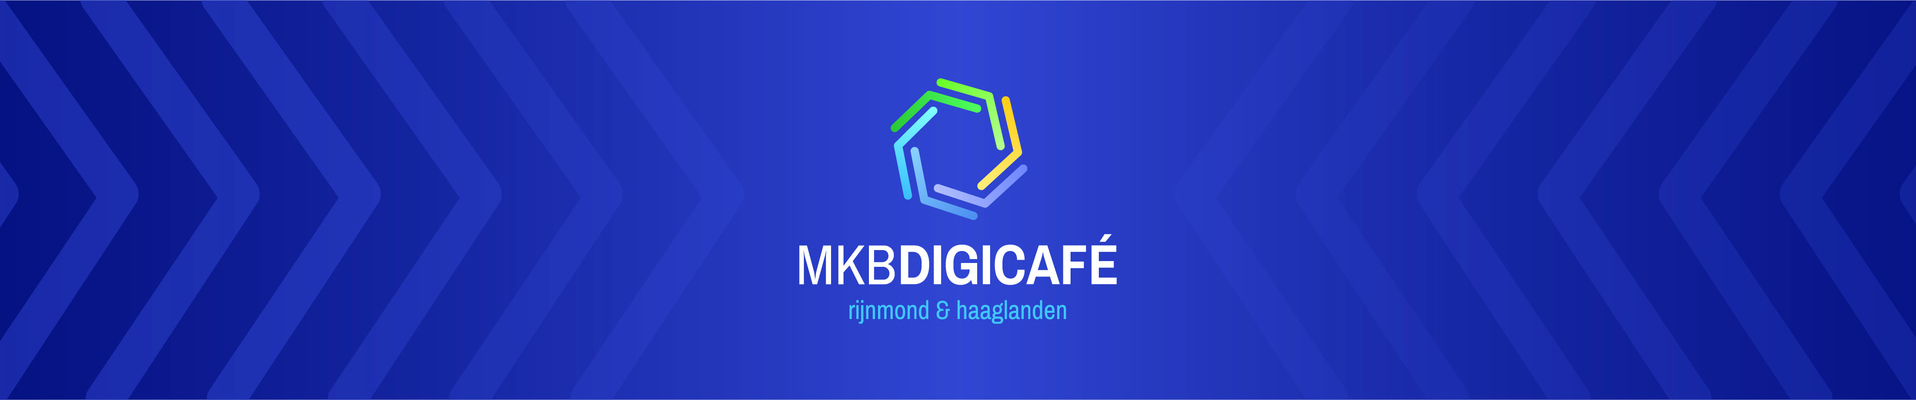 MKB Digicafé: Online & Social Marketing